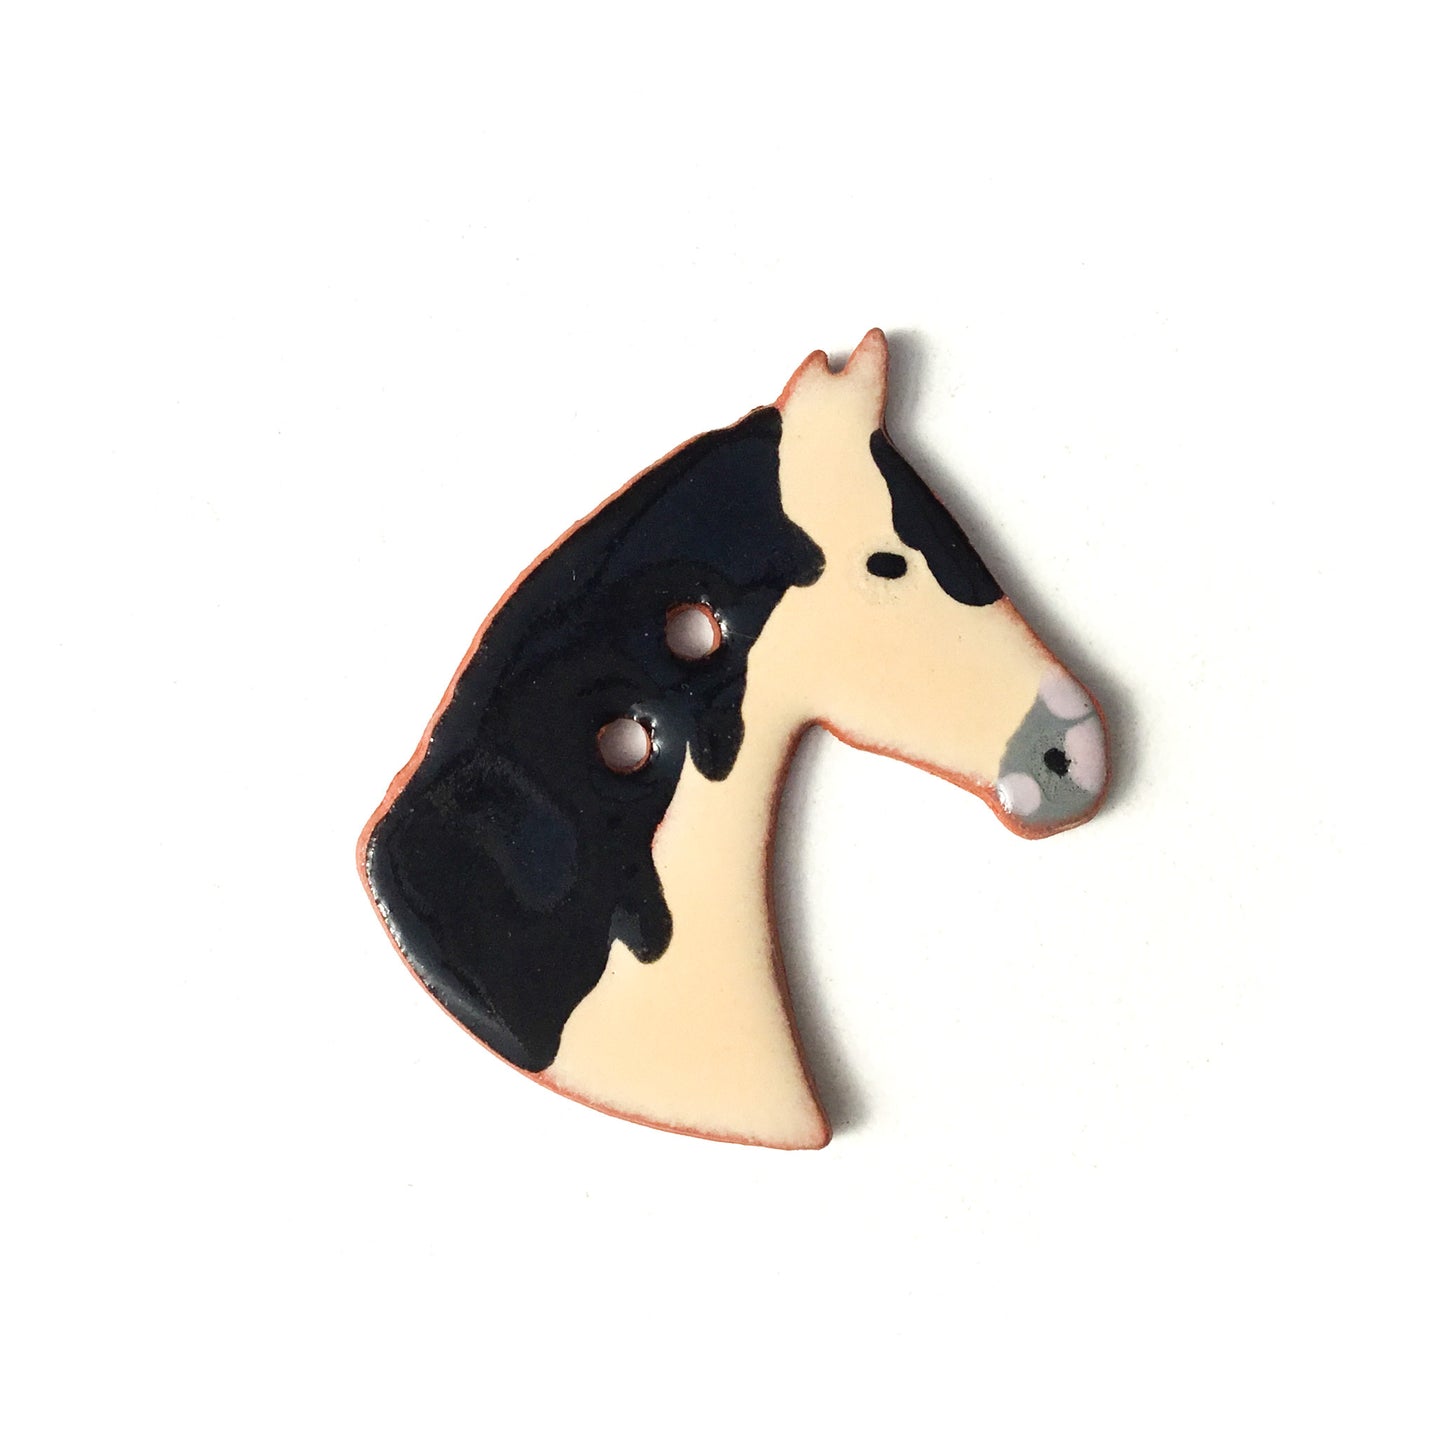 Ceramic Horse Head Buttons